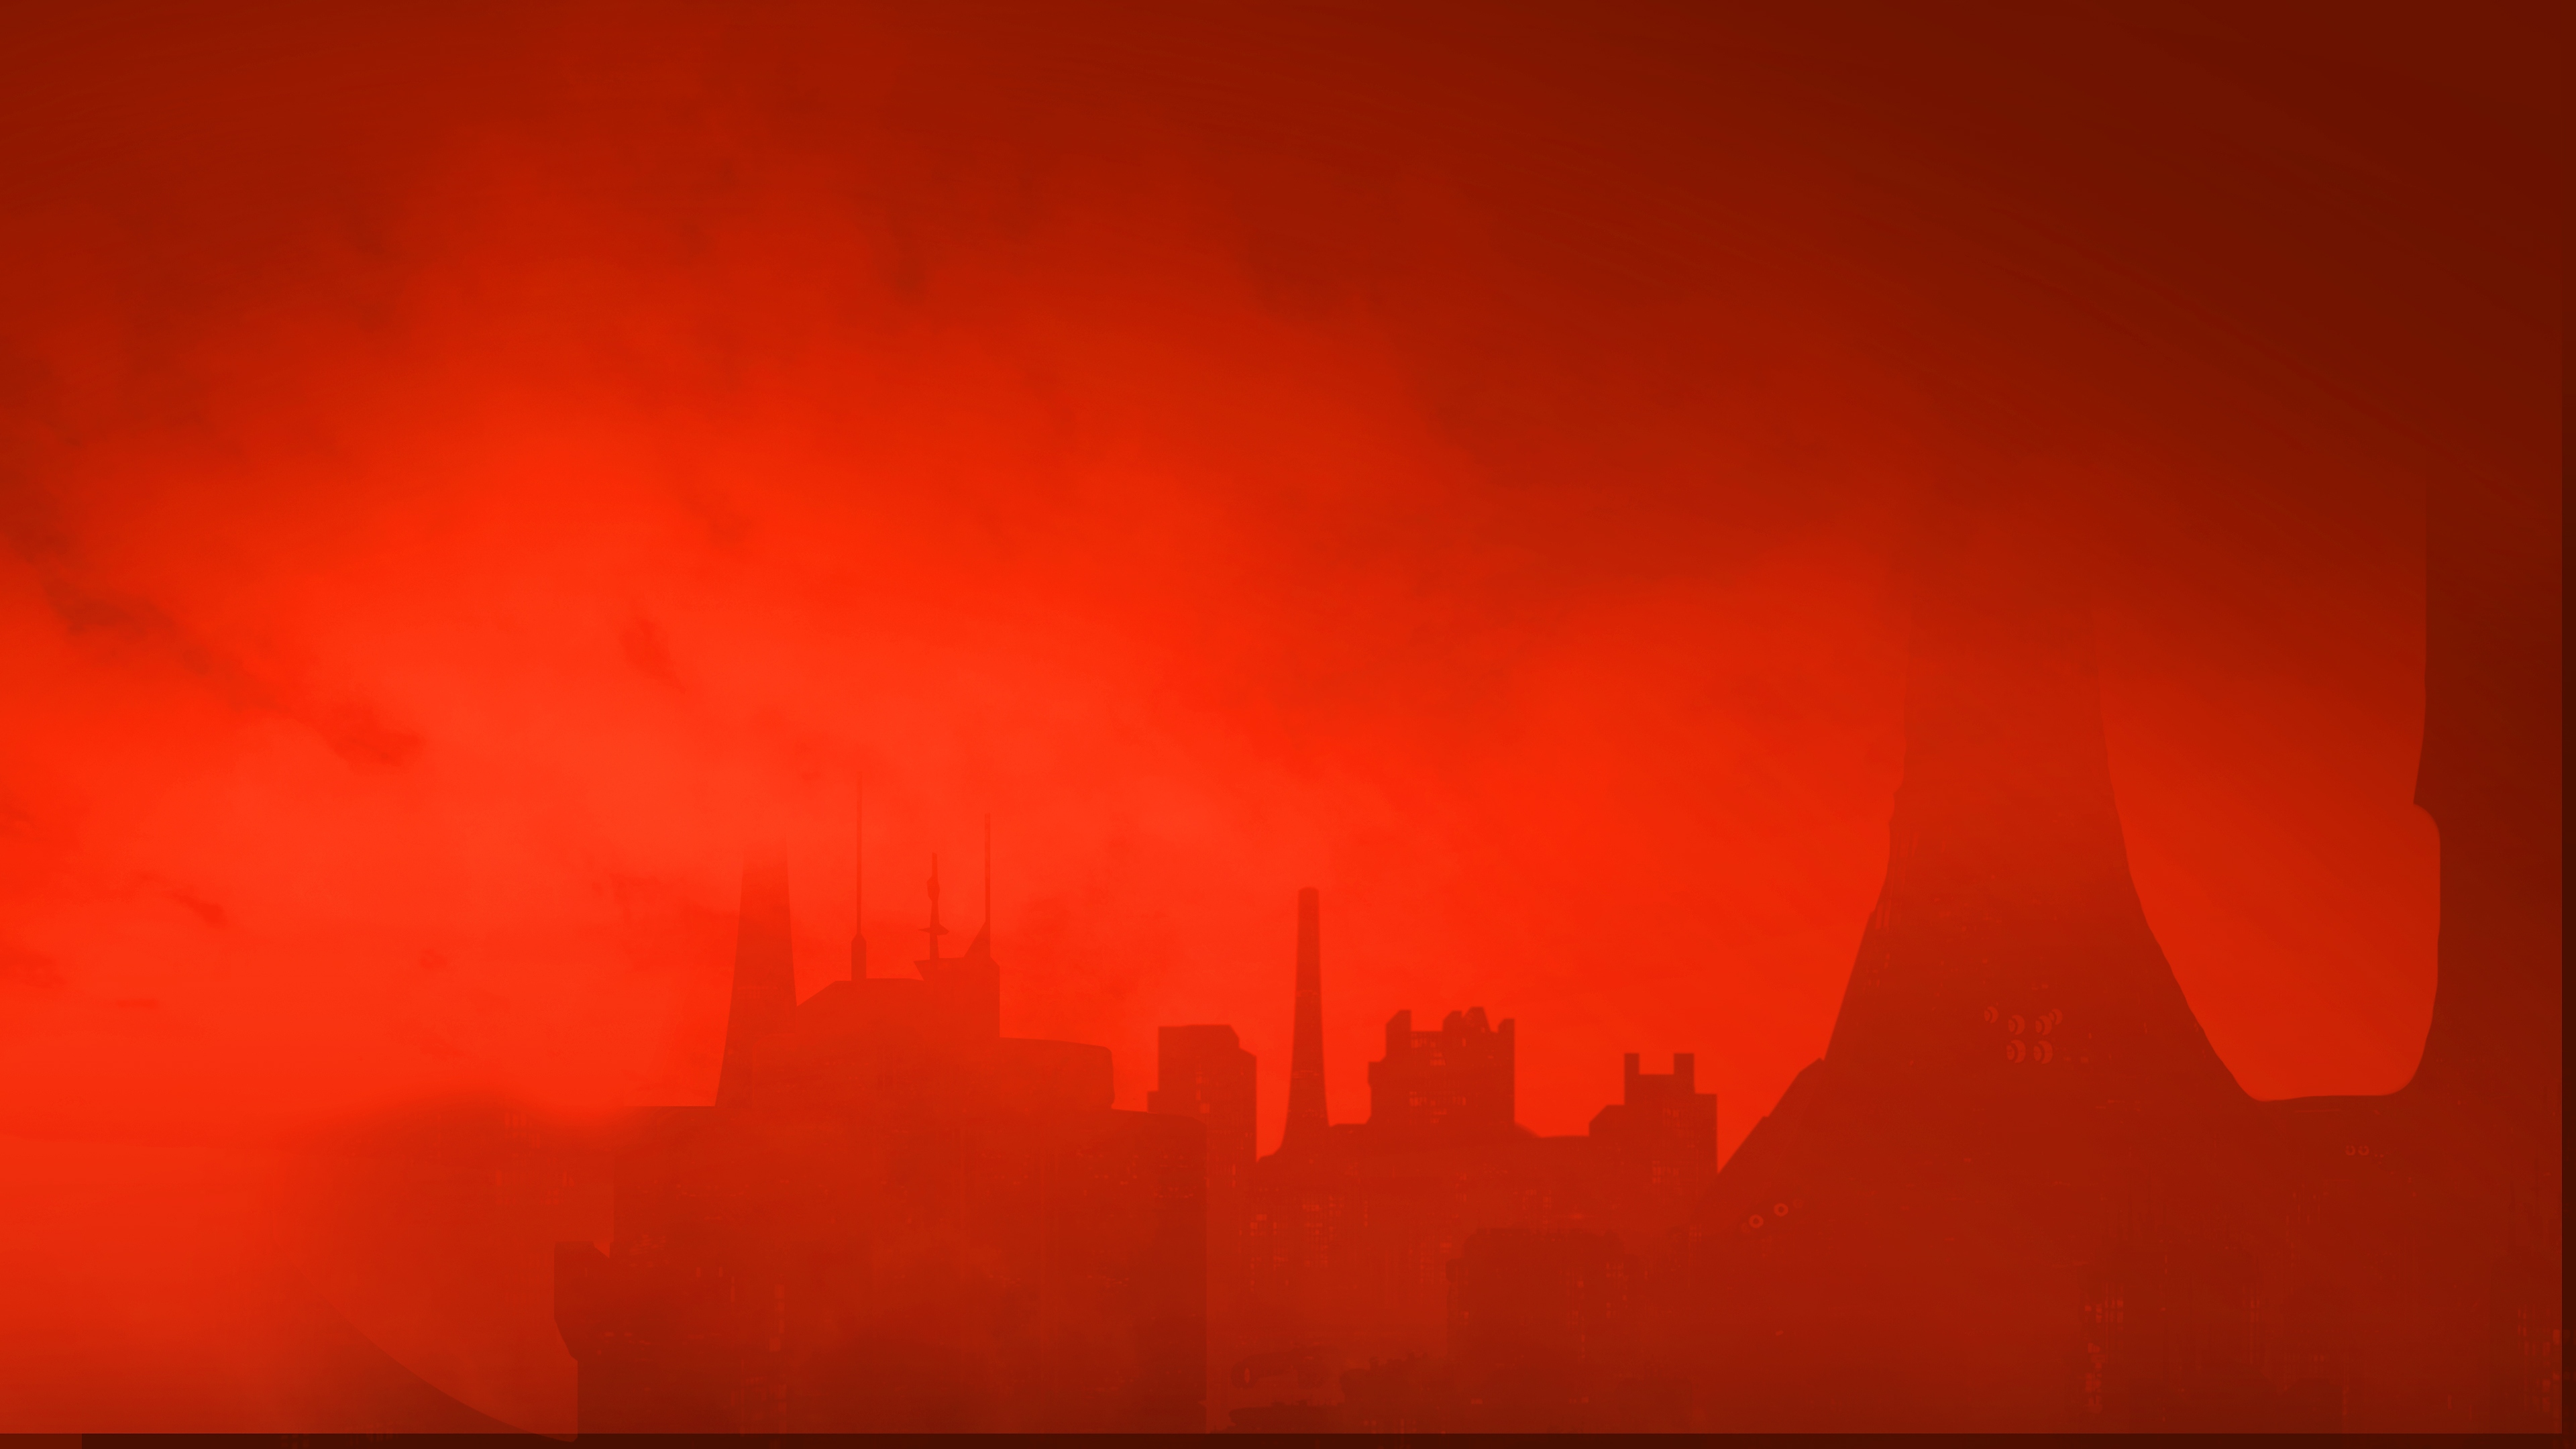 The Ascent background image - a city skyline under a red sky